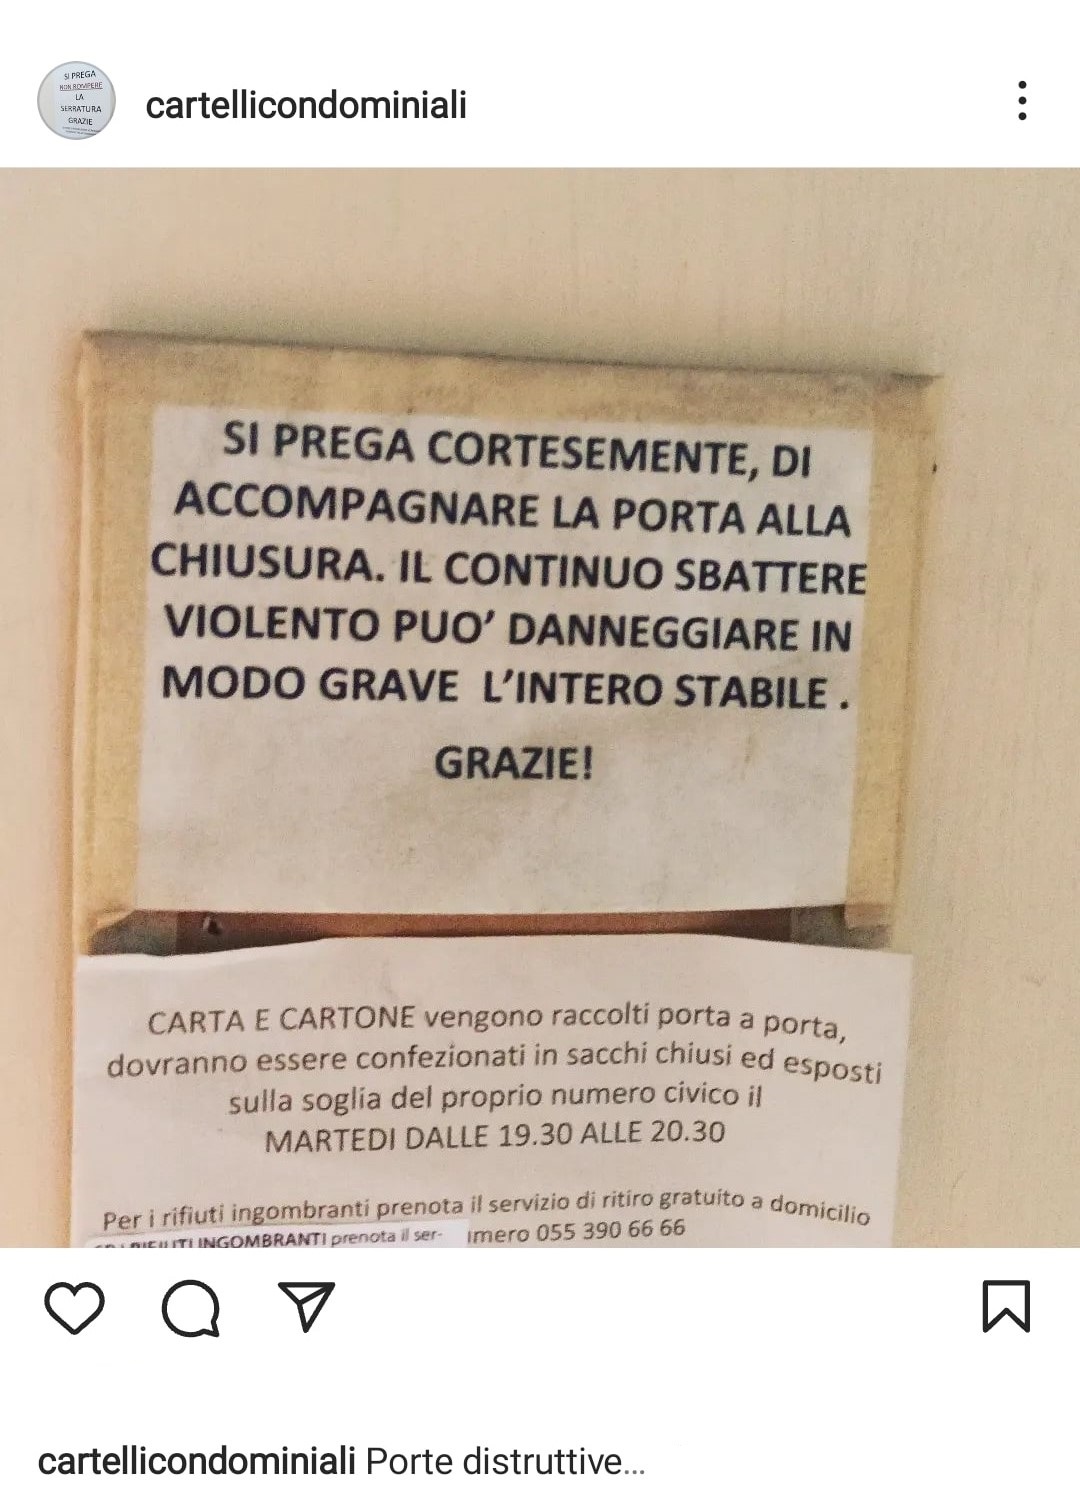 Il cartello 'catastrofista' in un condominio. Fonte: cartellineicondomini - Instagram